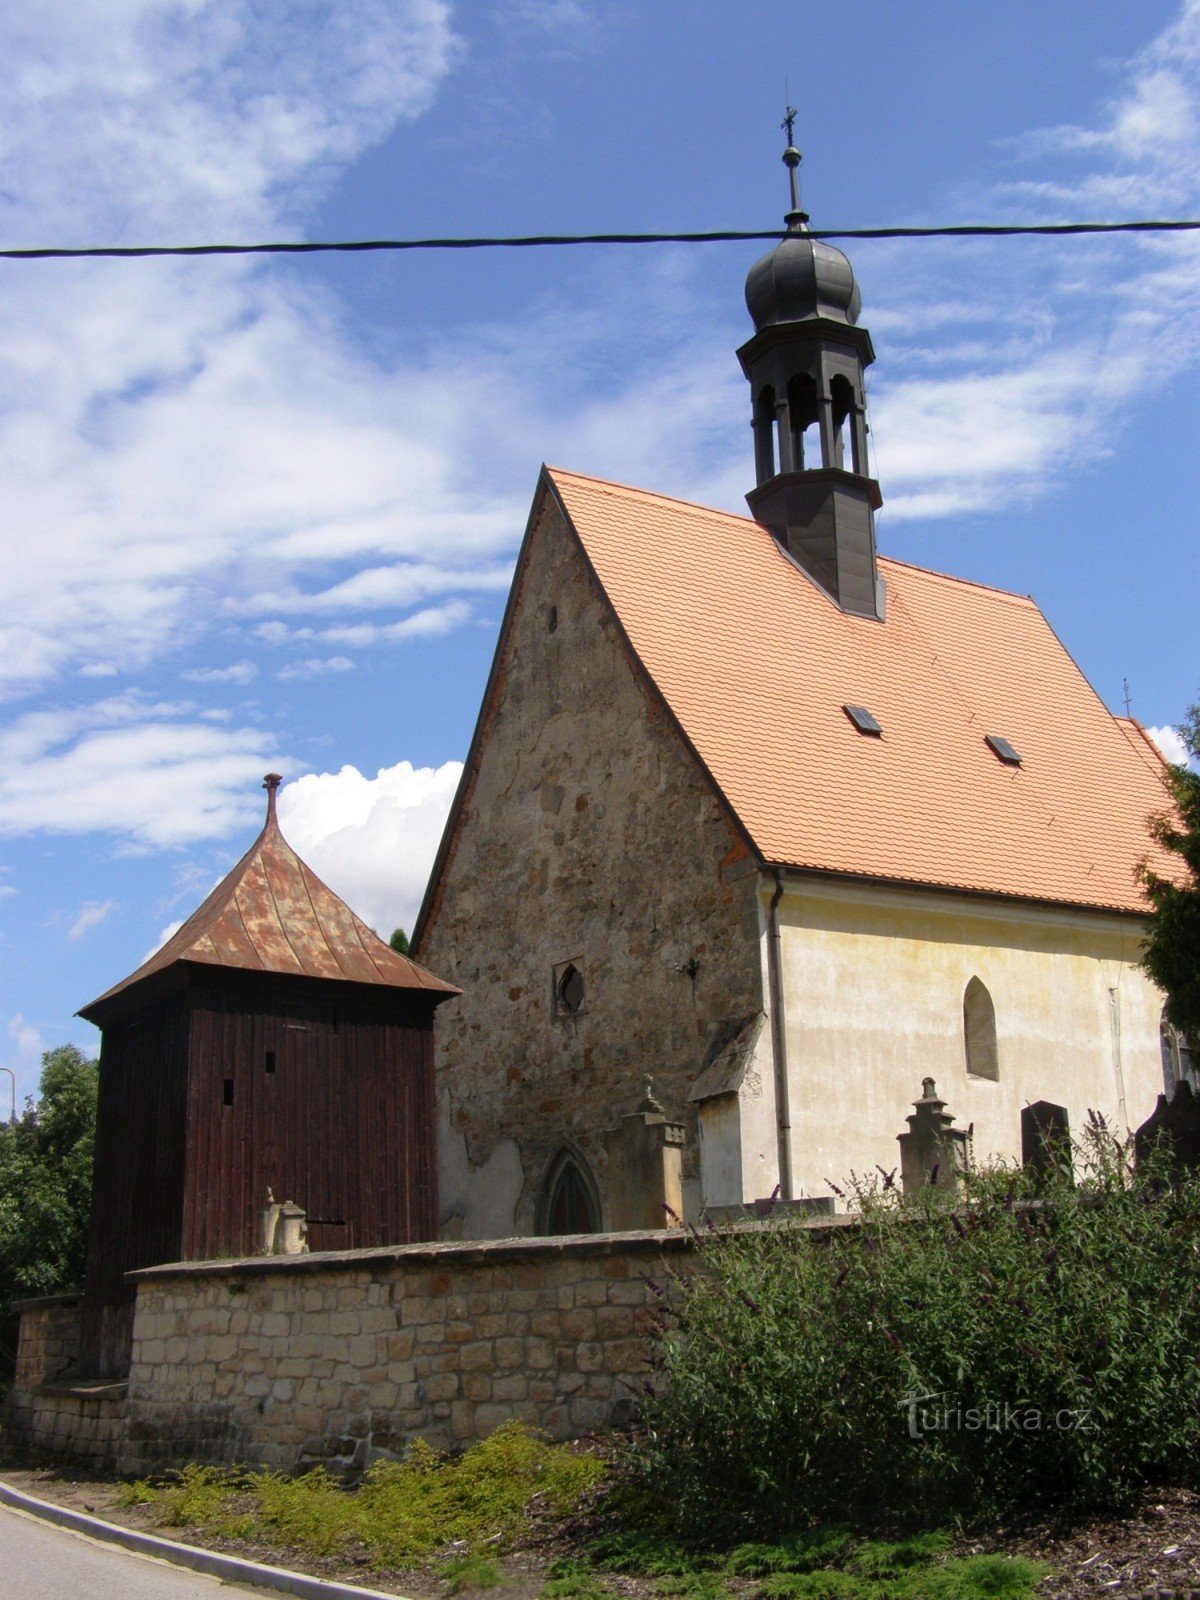 Nadslav - nhà thờ St. Procopius